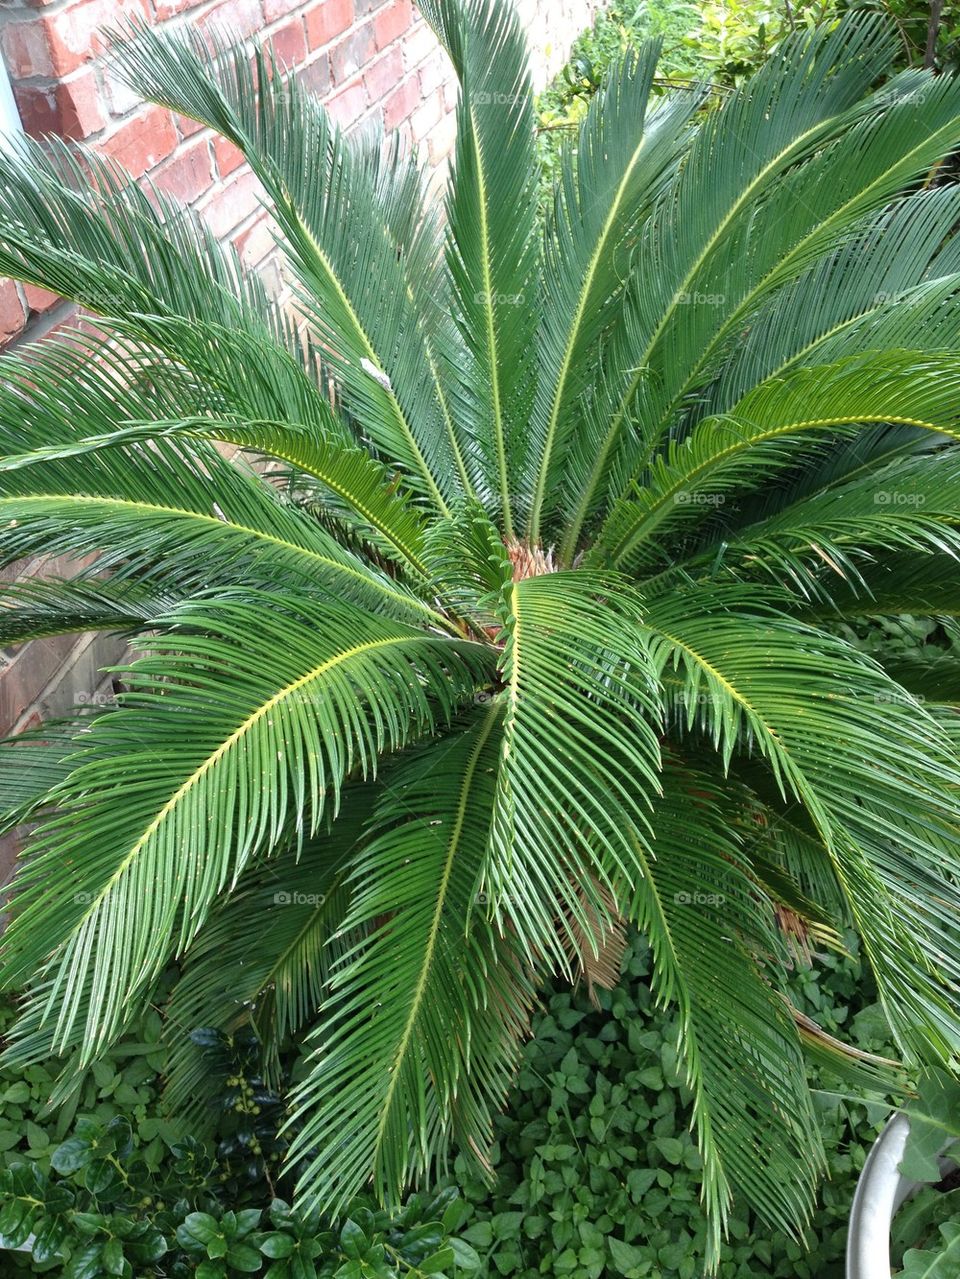 Prickly palm